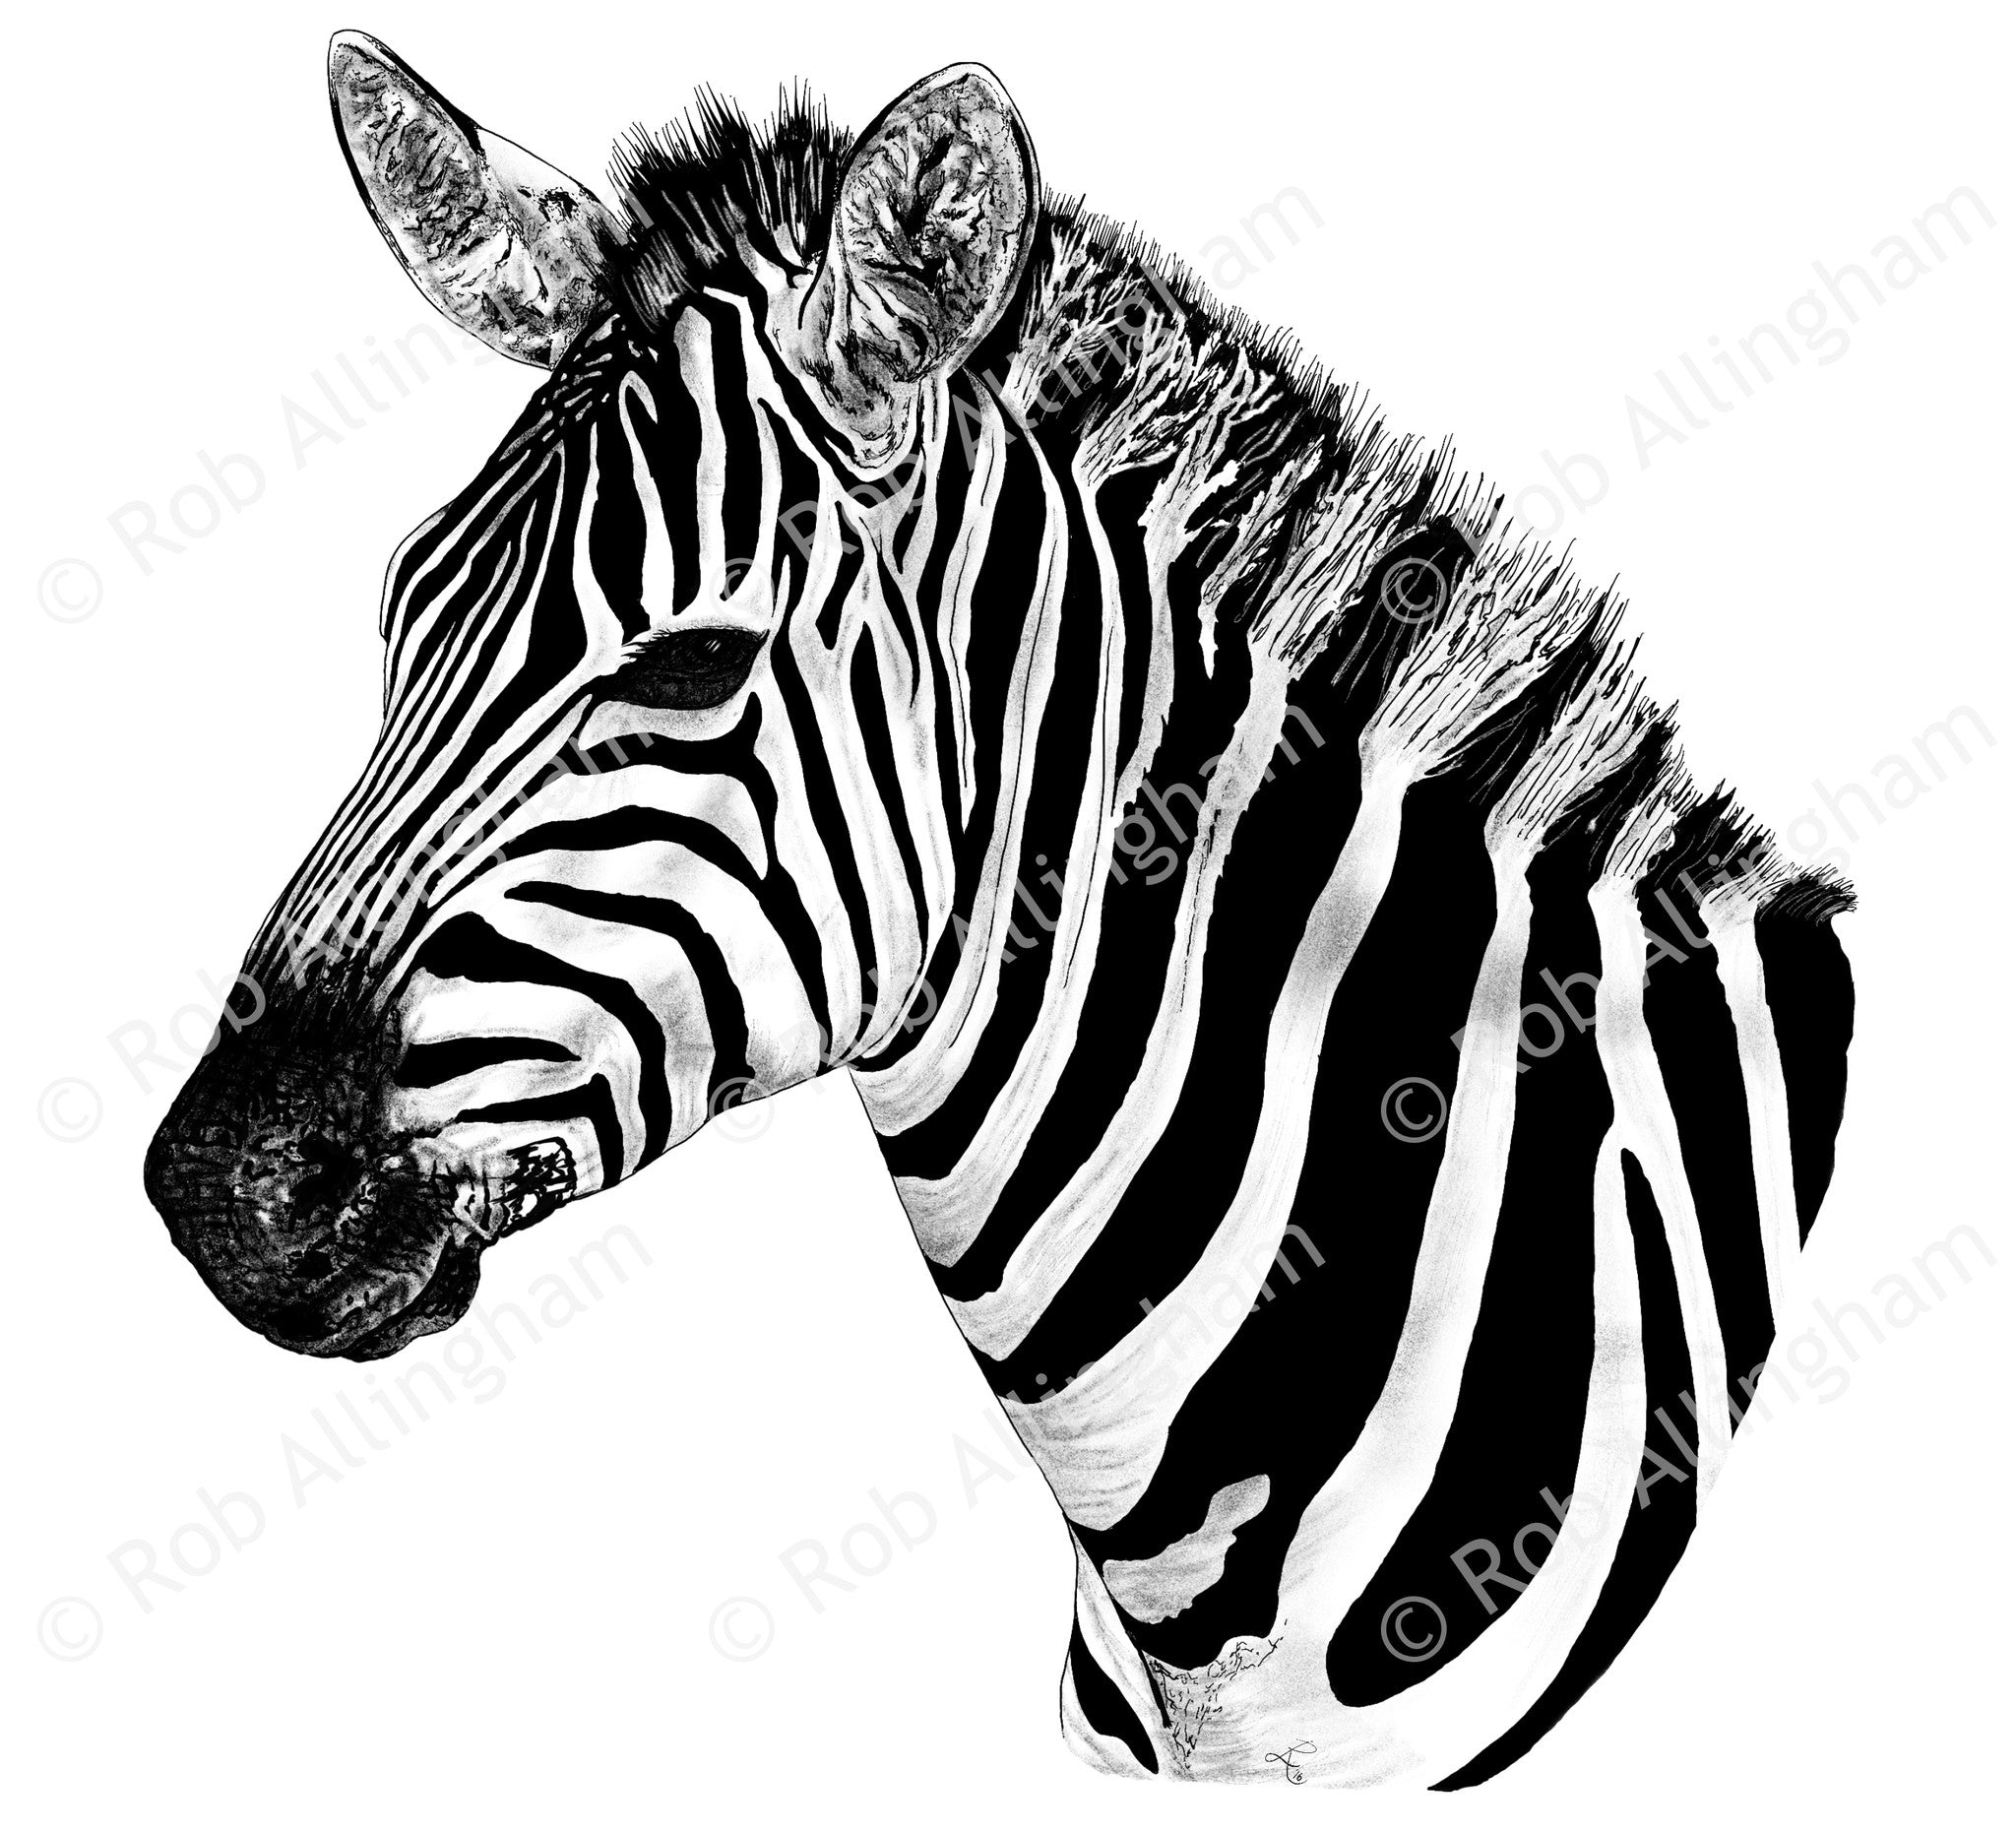 Zebra Head fine art illustration by Rob Allingham Proper Living Limited